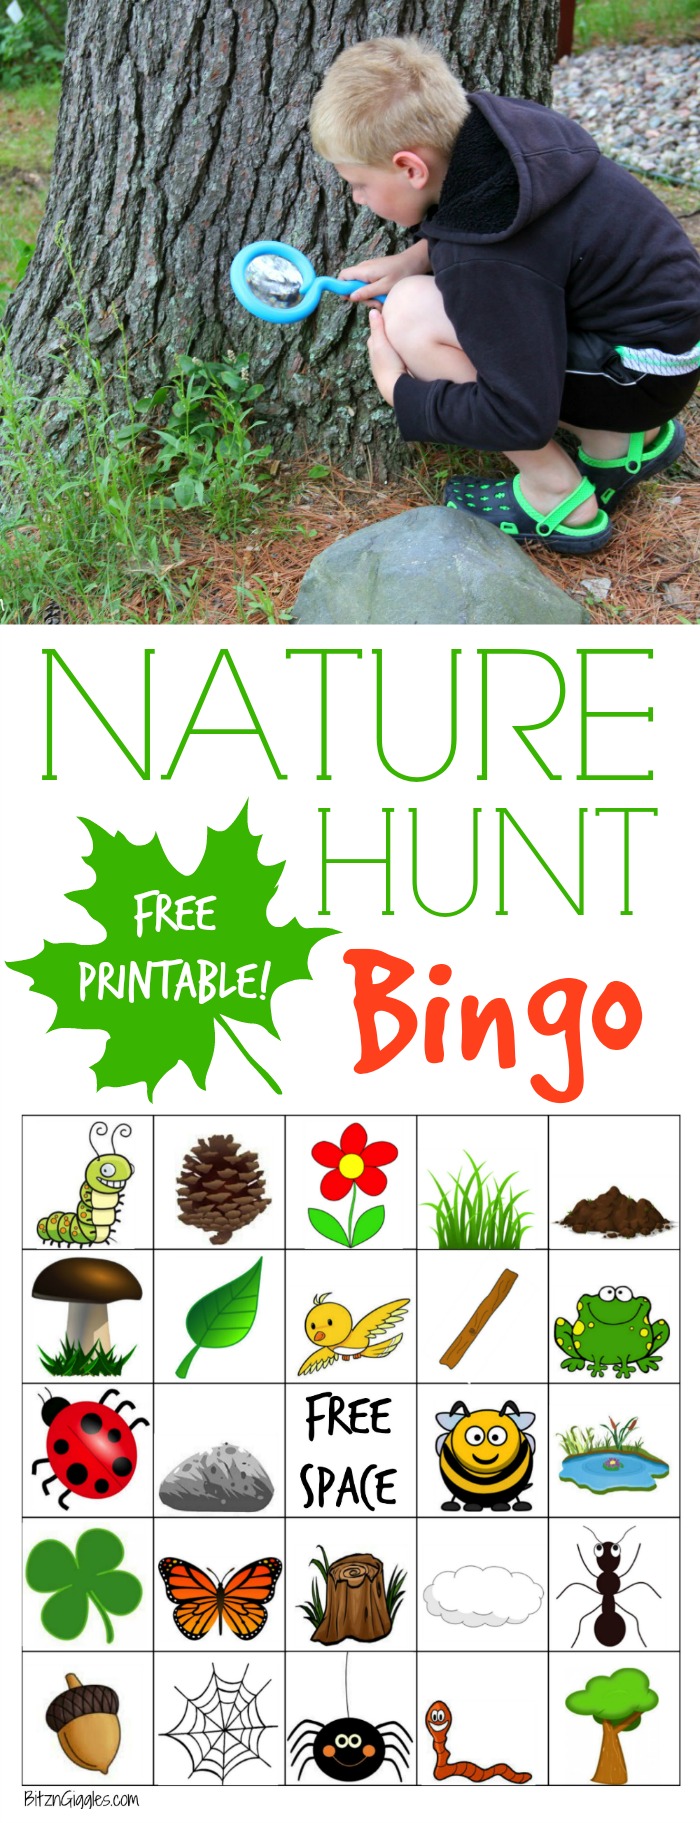 Nature Hunt Bingo